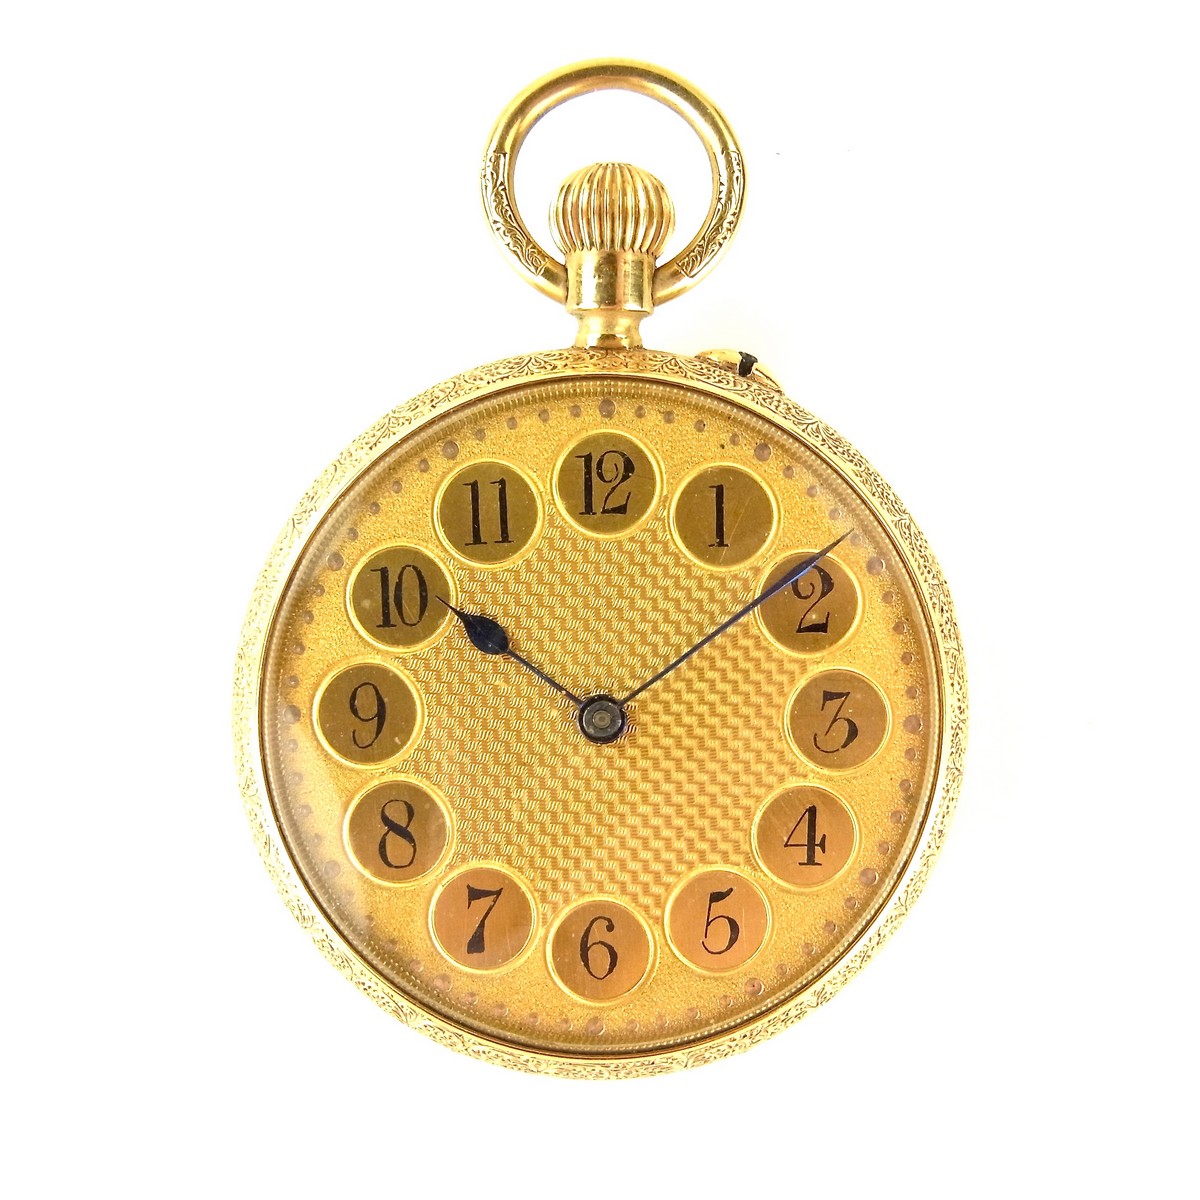 18 ct yellow gold open face pocket watch. Stem-wind, pin-set movement.